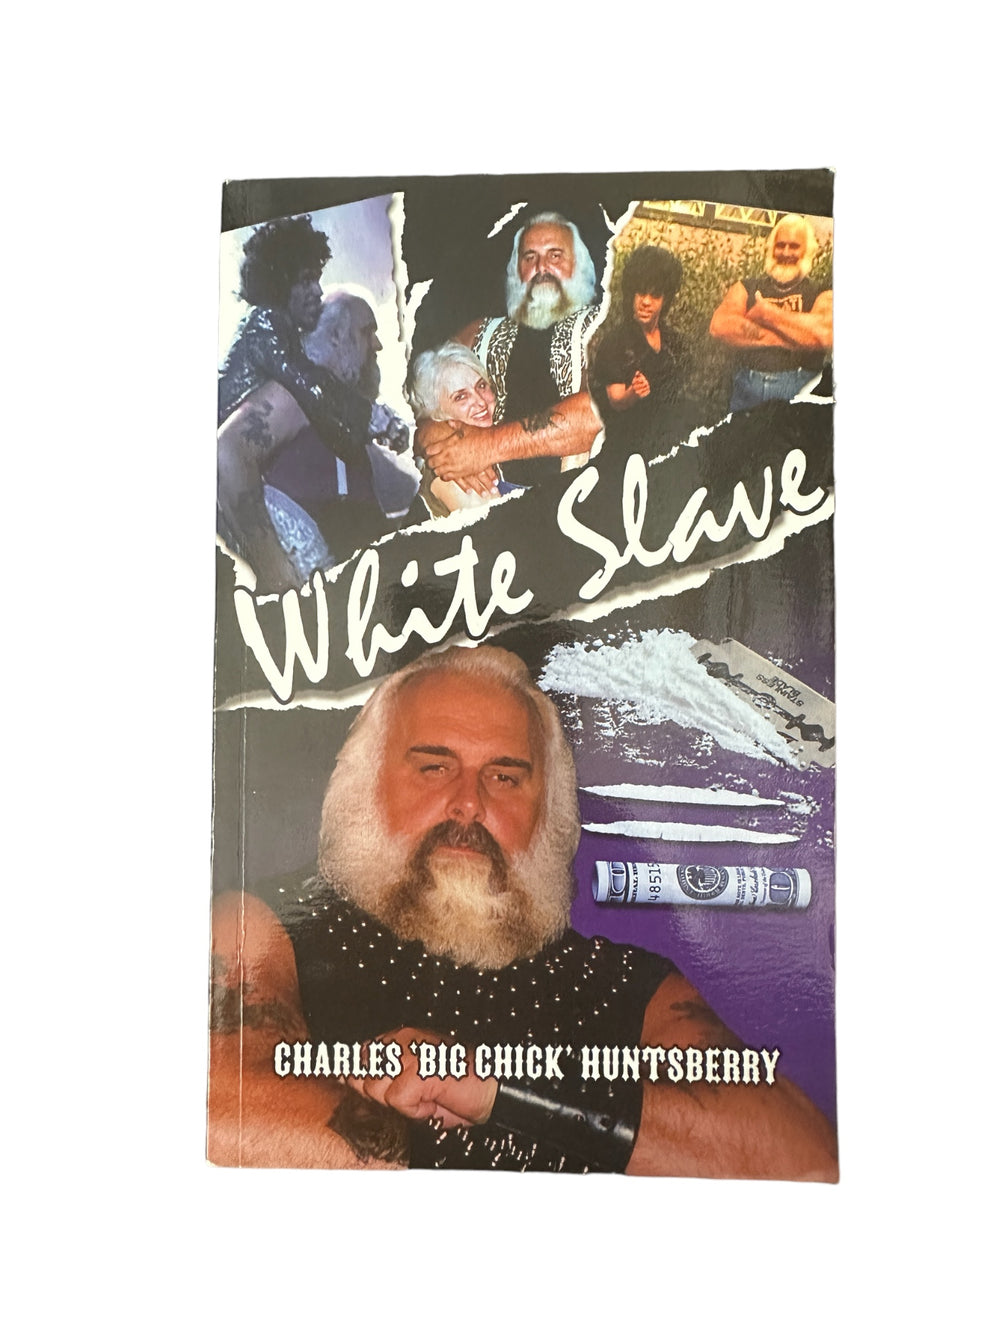 White Slave Charles 'Big Chick' Huntsberry Soft Back Book Prince